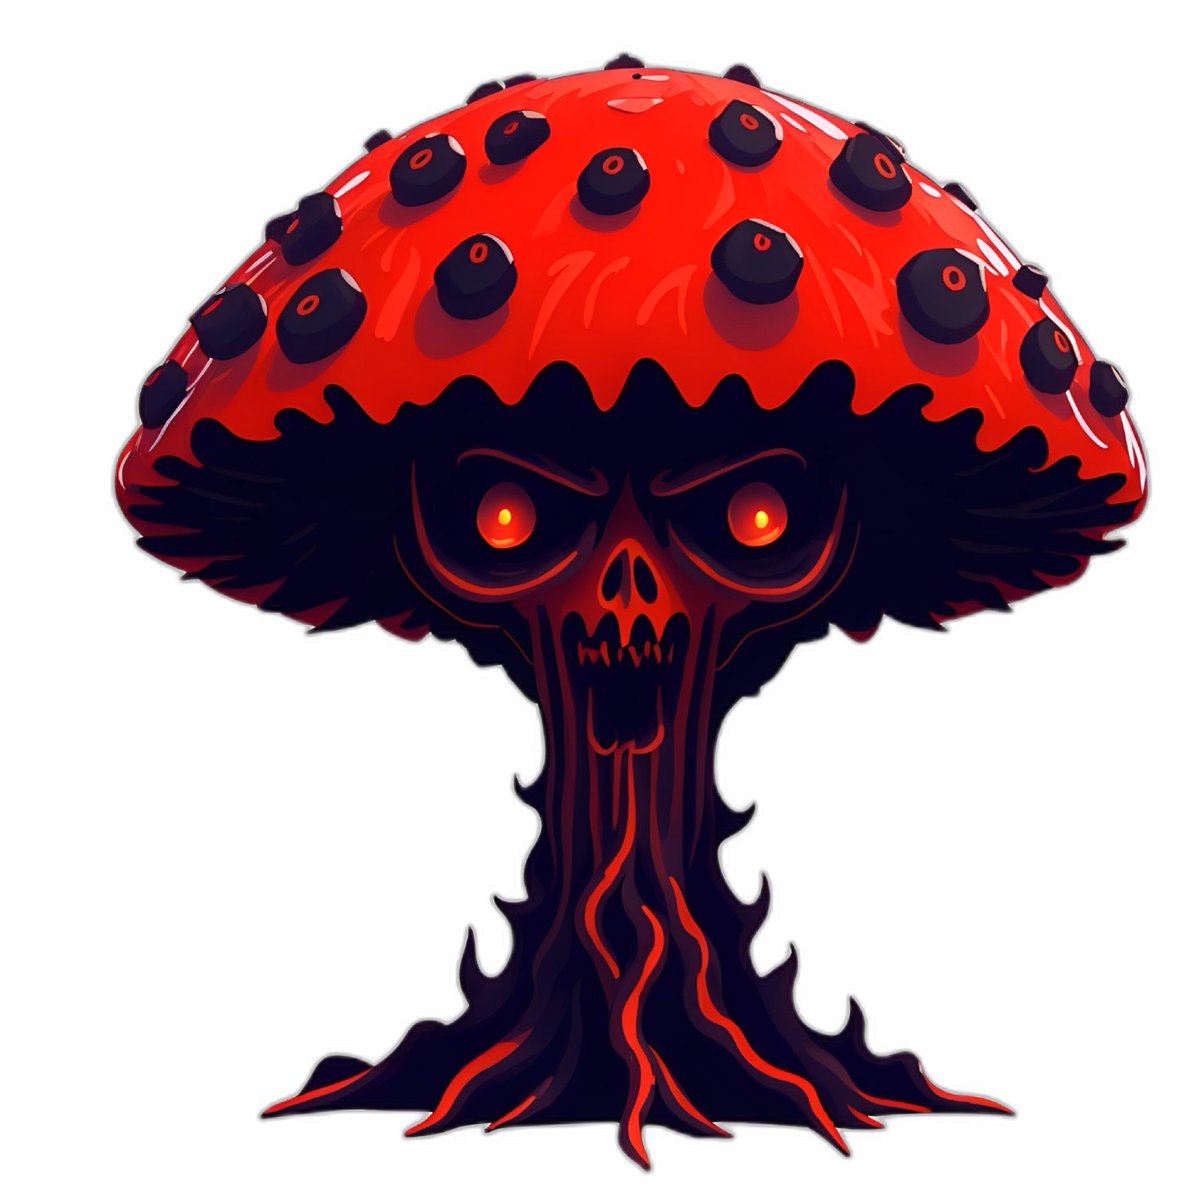 Die-Cut Sticker featuring a Red and Black Evil Mushroom! 🖤 Perfect for adding a creepy-cute touch to your belongings. 🌙 #DieCutSticker #RedAndBlackMushroom #SinisterArt #GothicDesign #HalloweenSticker #LaptopDecal #UniqueIllustration #GrungeAesthetic #FantasyCreature #DarkCharm